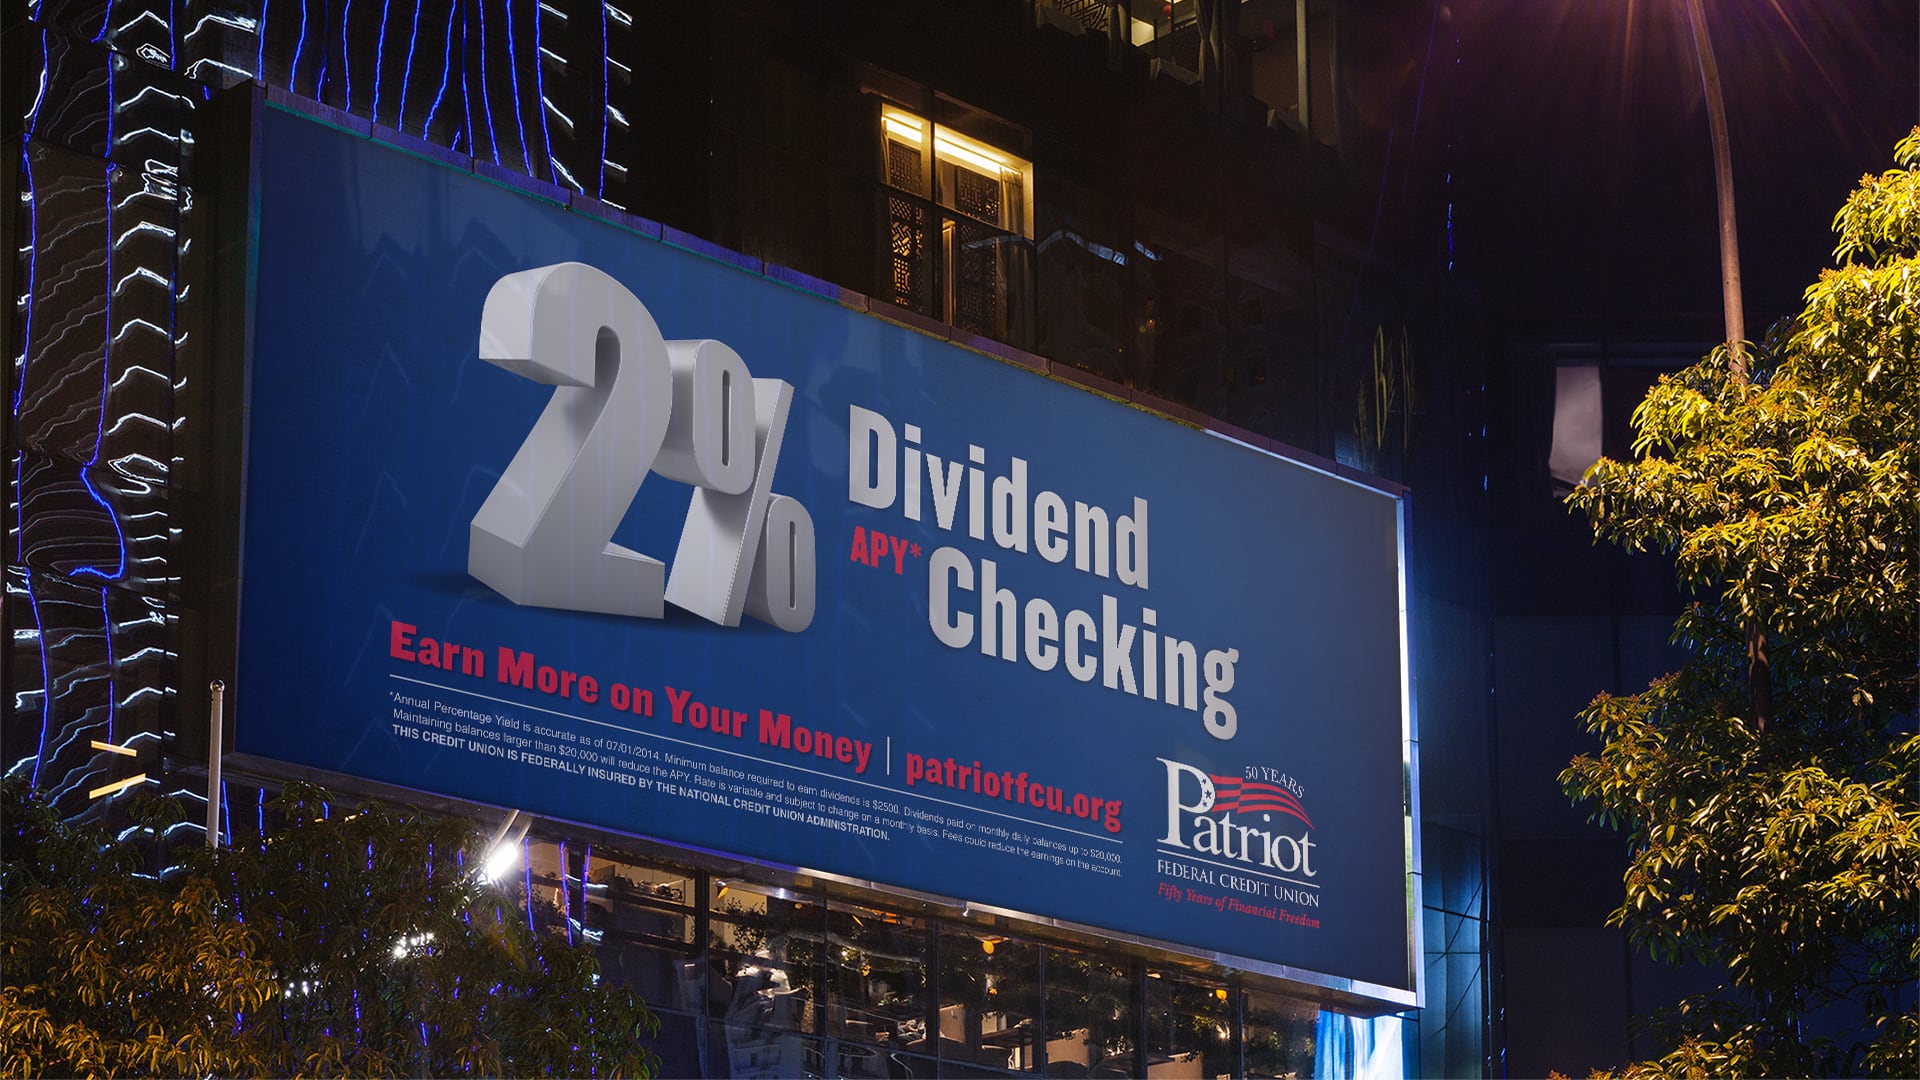 Dividend checking campaign billboard